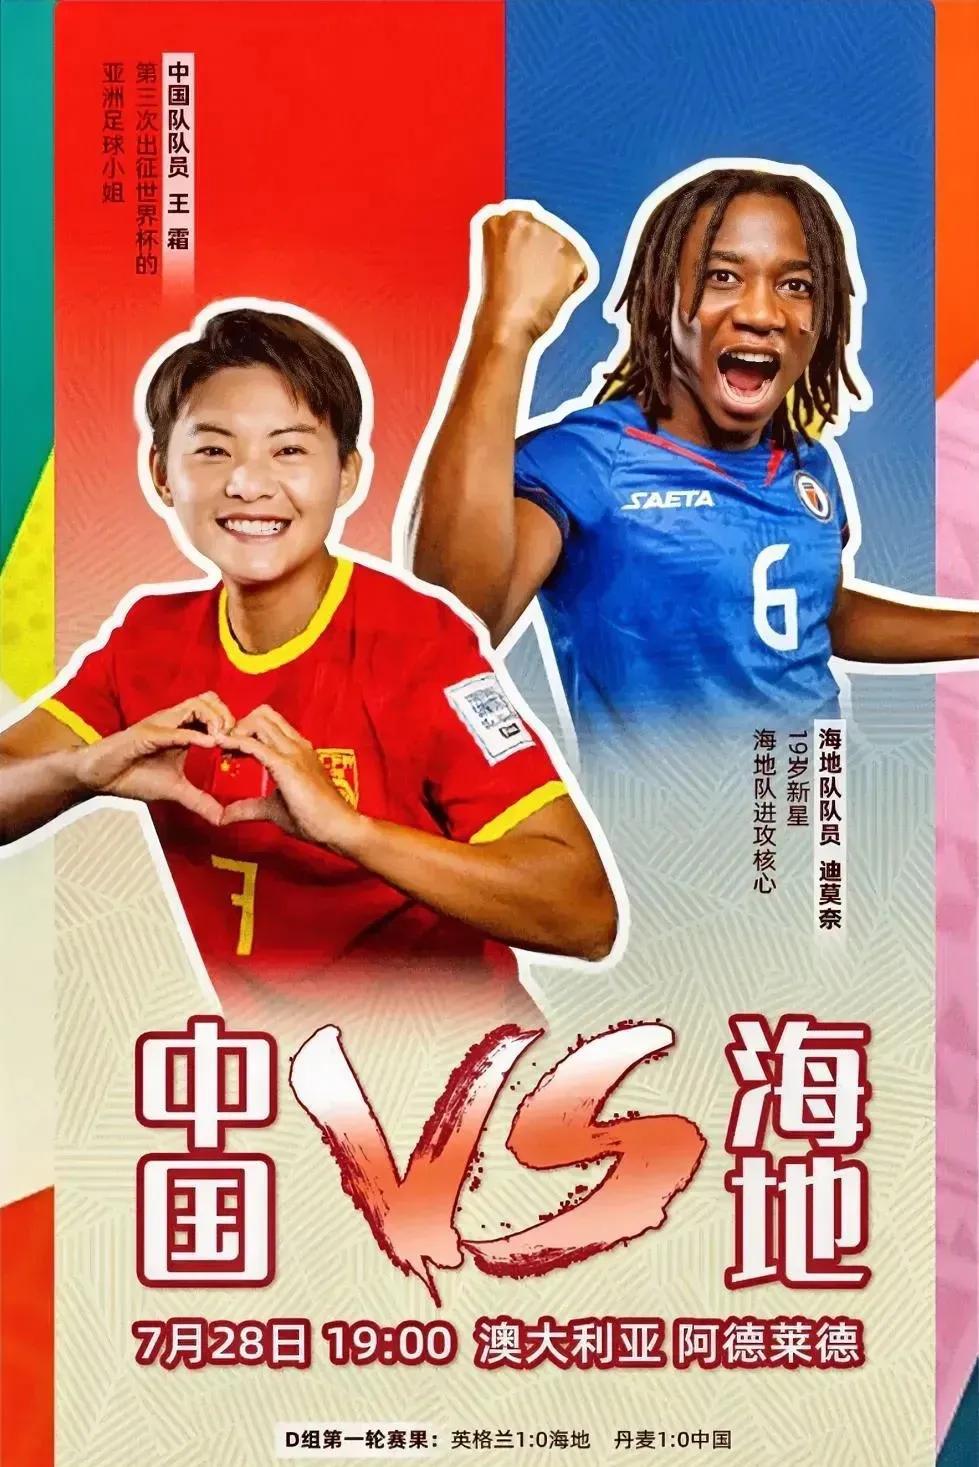 CCTV5是怎么了？他们竟然不直播中国女足对海地的比赛！这可是小组赛的关键战役，